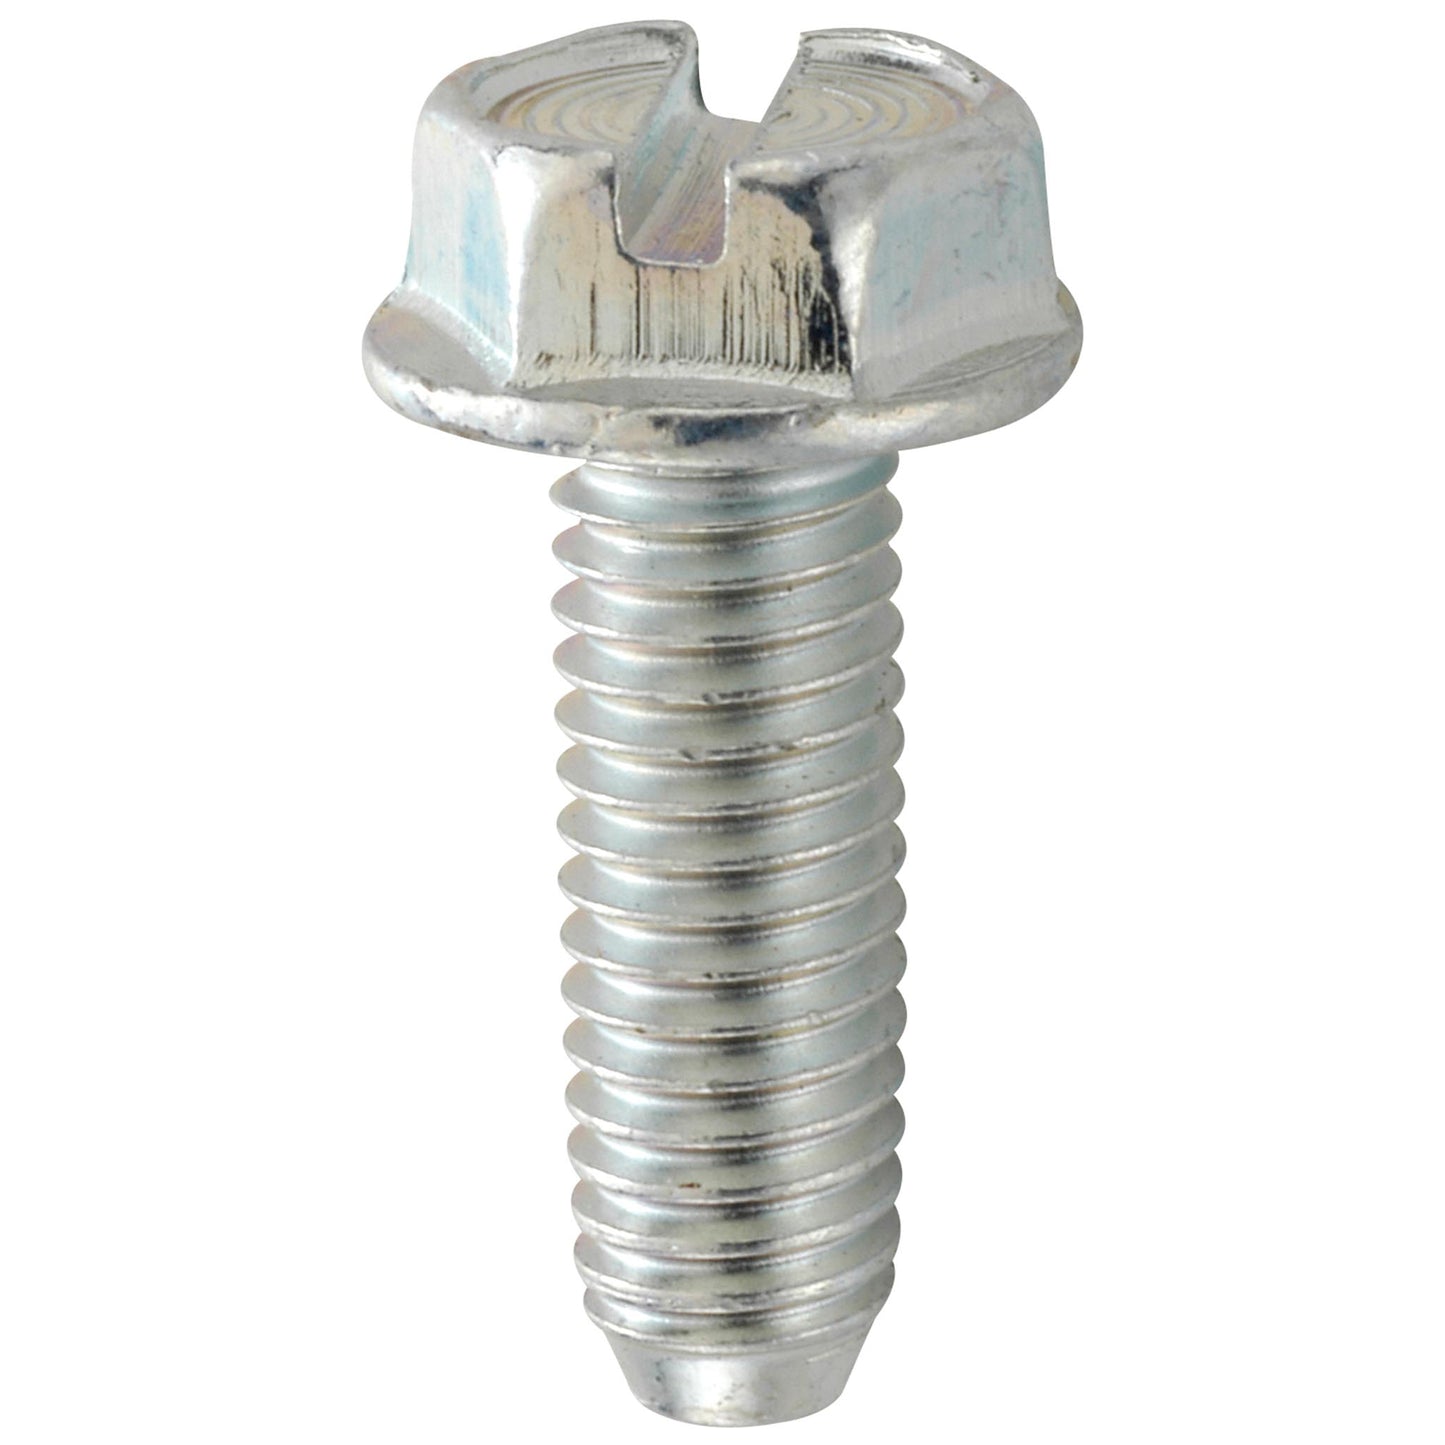 Mudguard screws M 5 x 40 galvanized steel